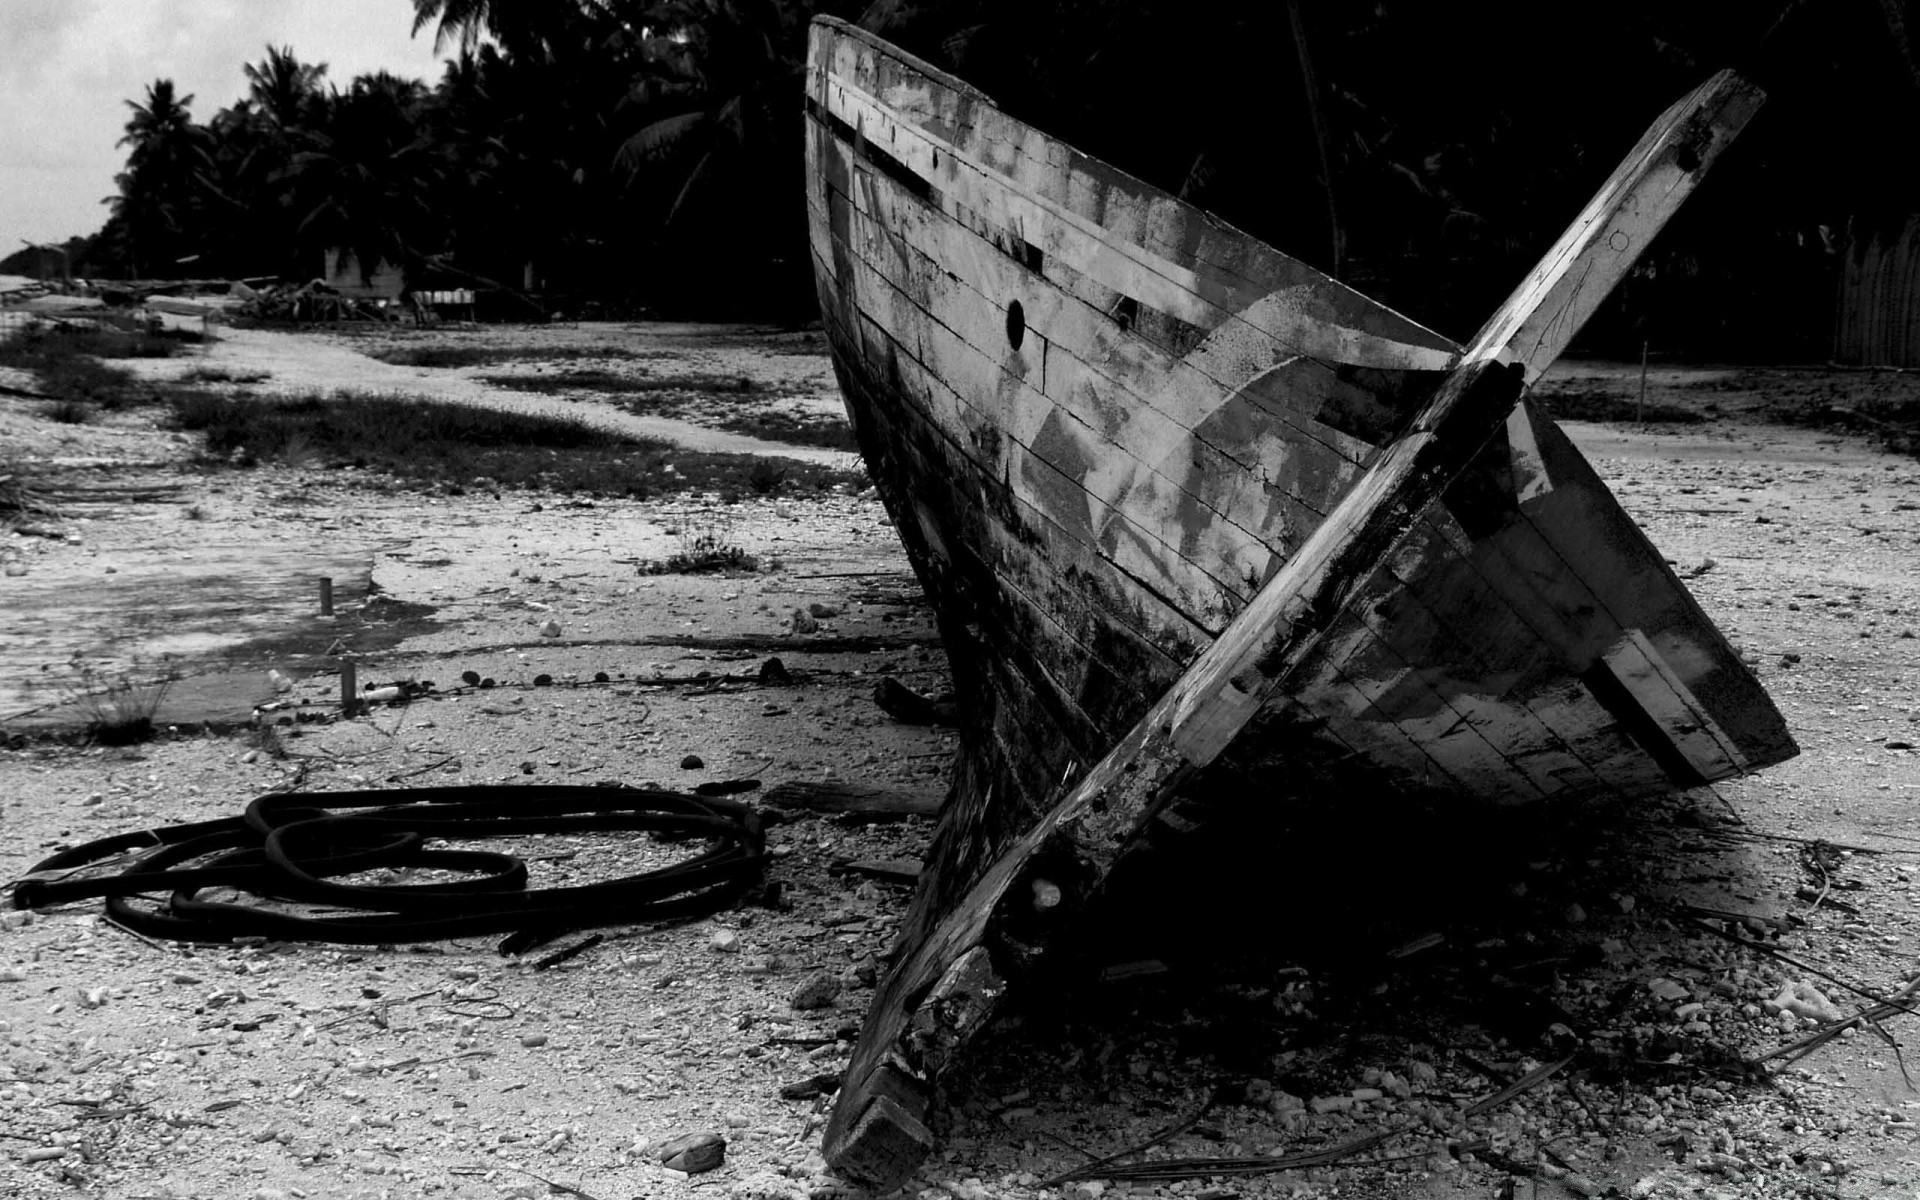 black and white abandoned wreckage shipwreck water monochrome broken watercraft calamity vehicle beach boat wreck transportation system